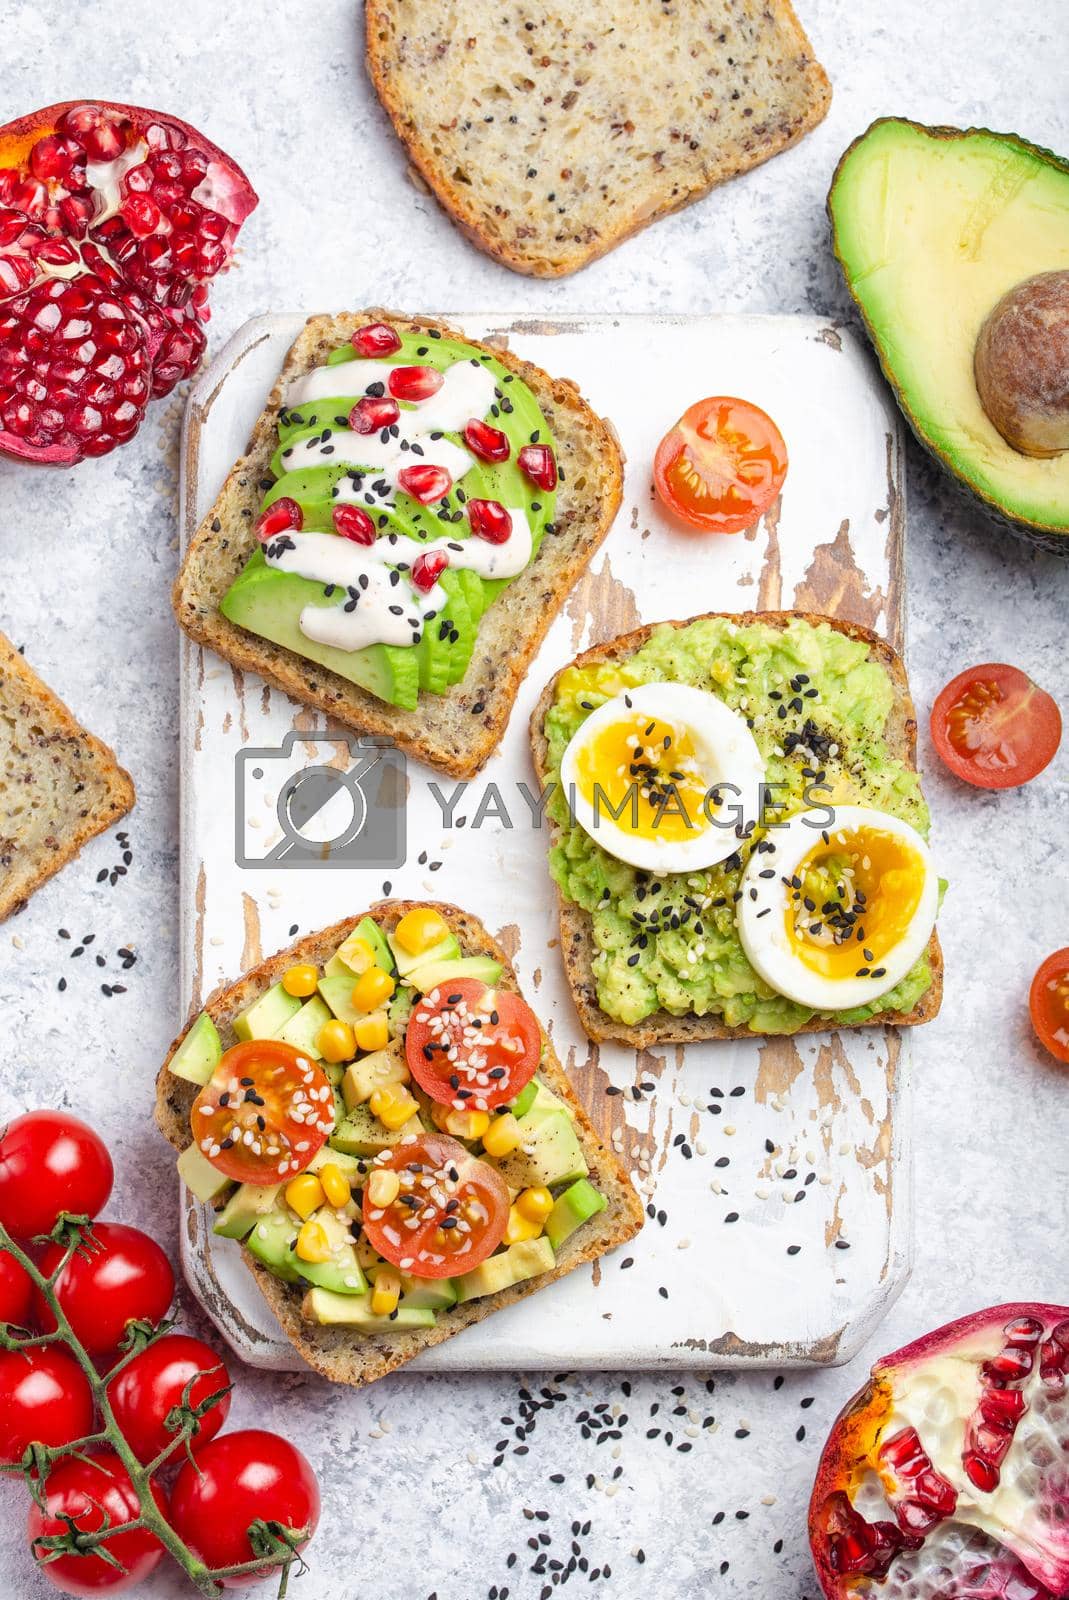 Royalty free image of Avocado healthy  toasts by its_al_dente